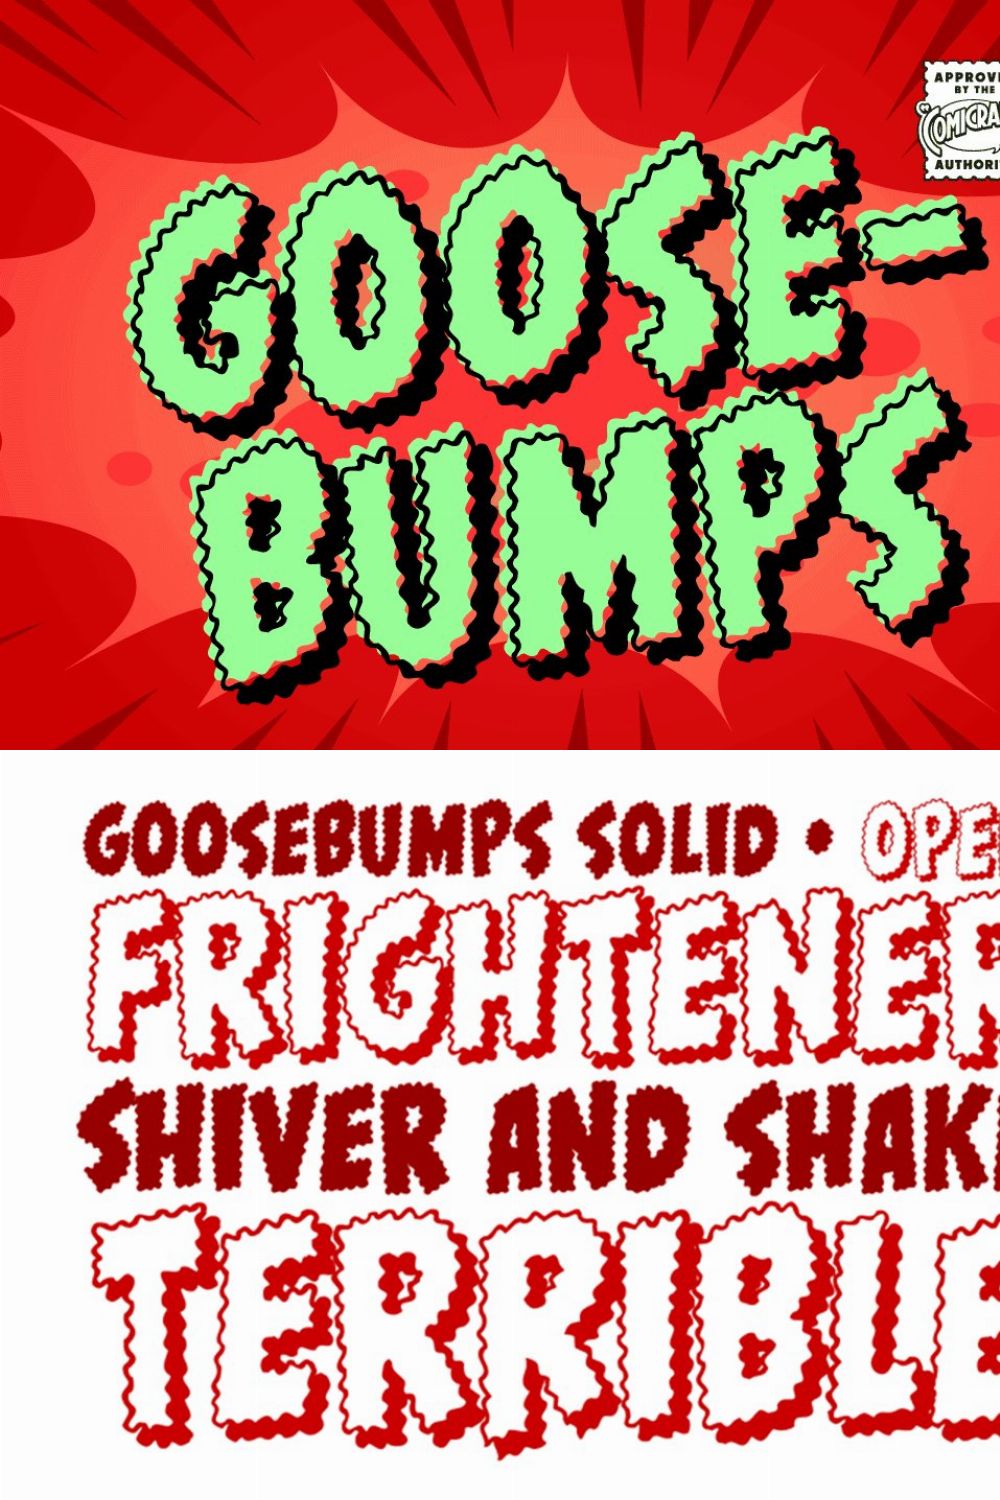 Goosebumps pinterest preview image.